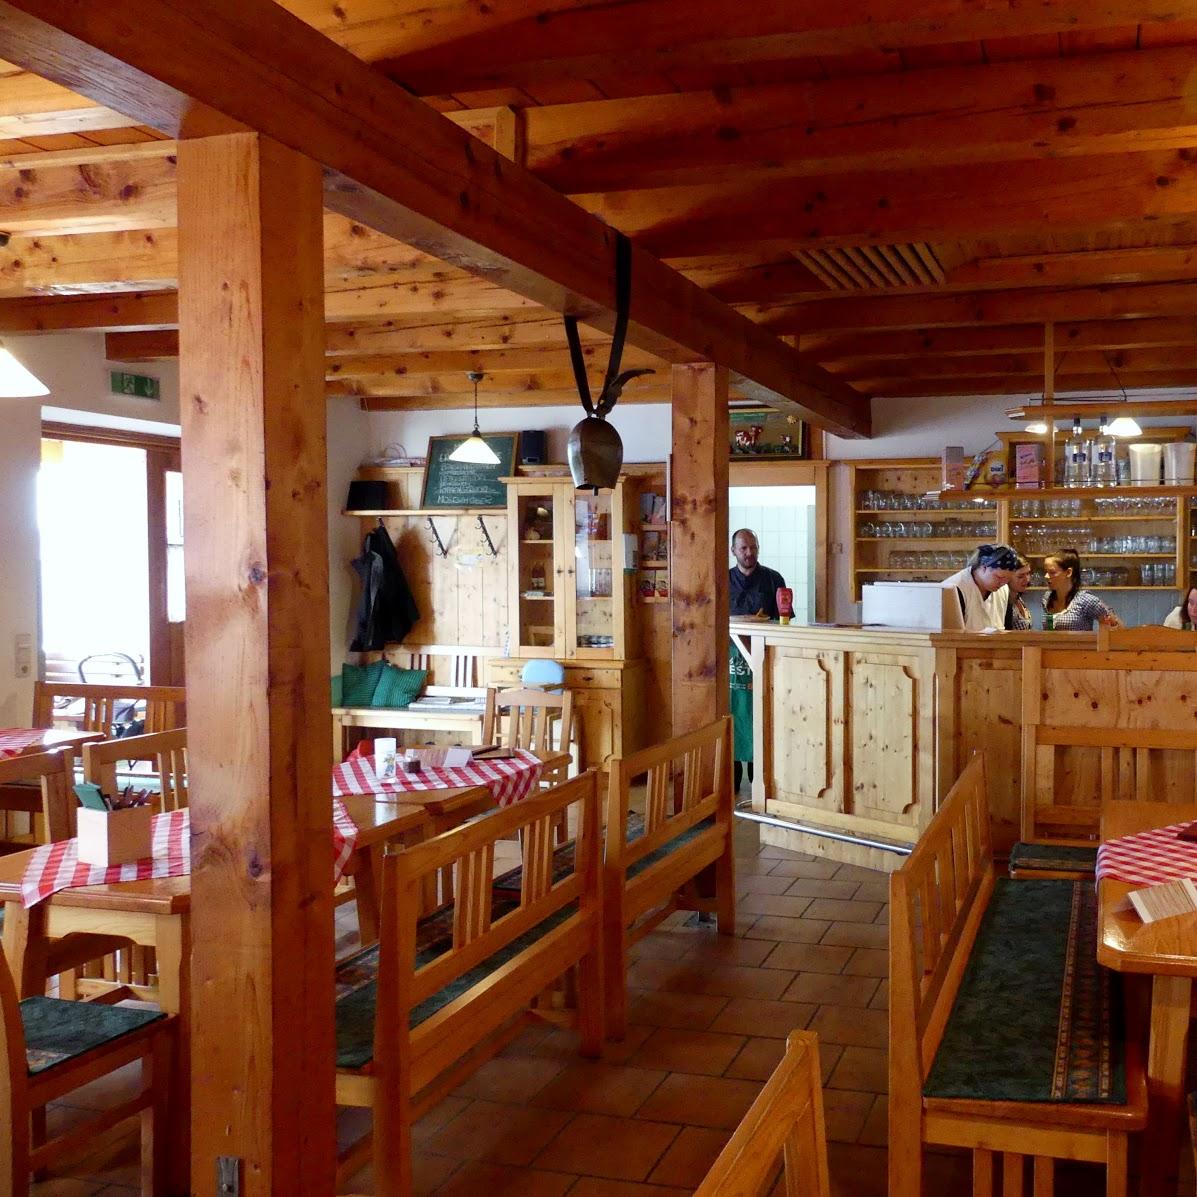 Restaurant "Almhaus am Hochkoglberg" in Randegg